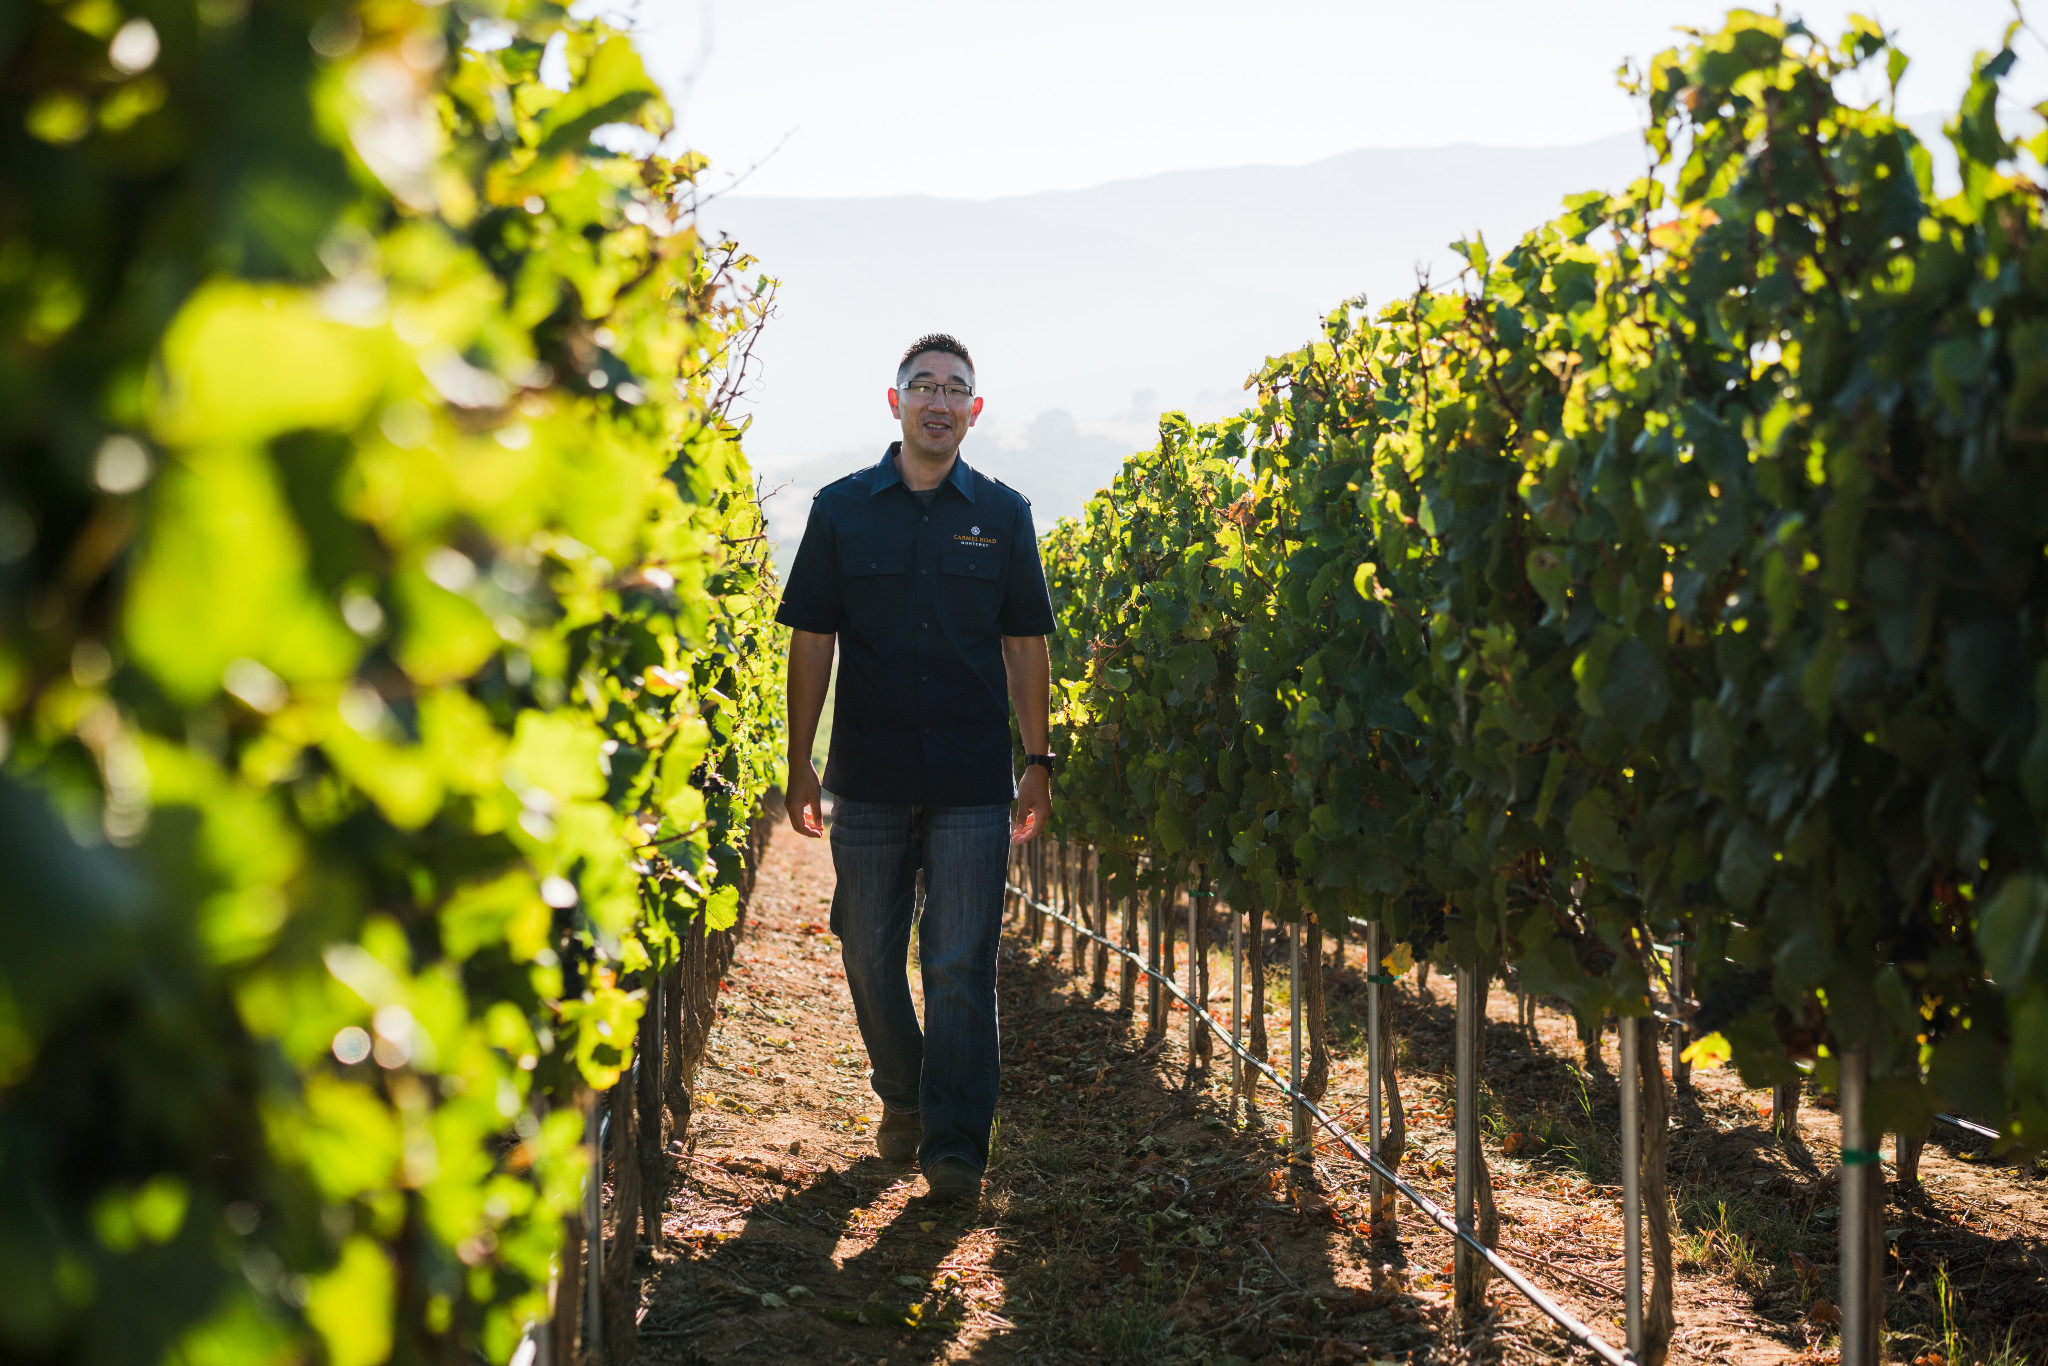 Winemaker in vineyard